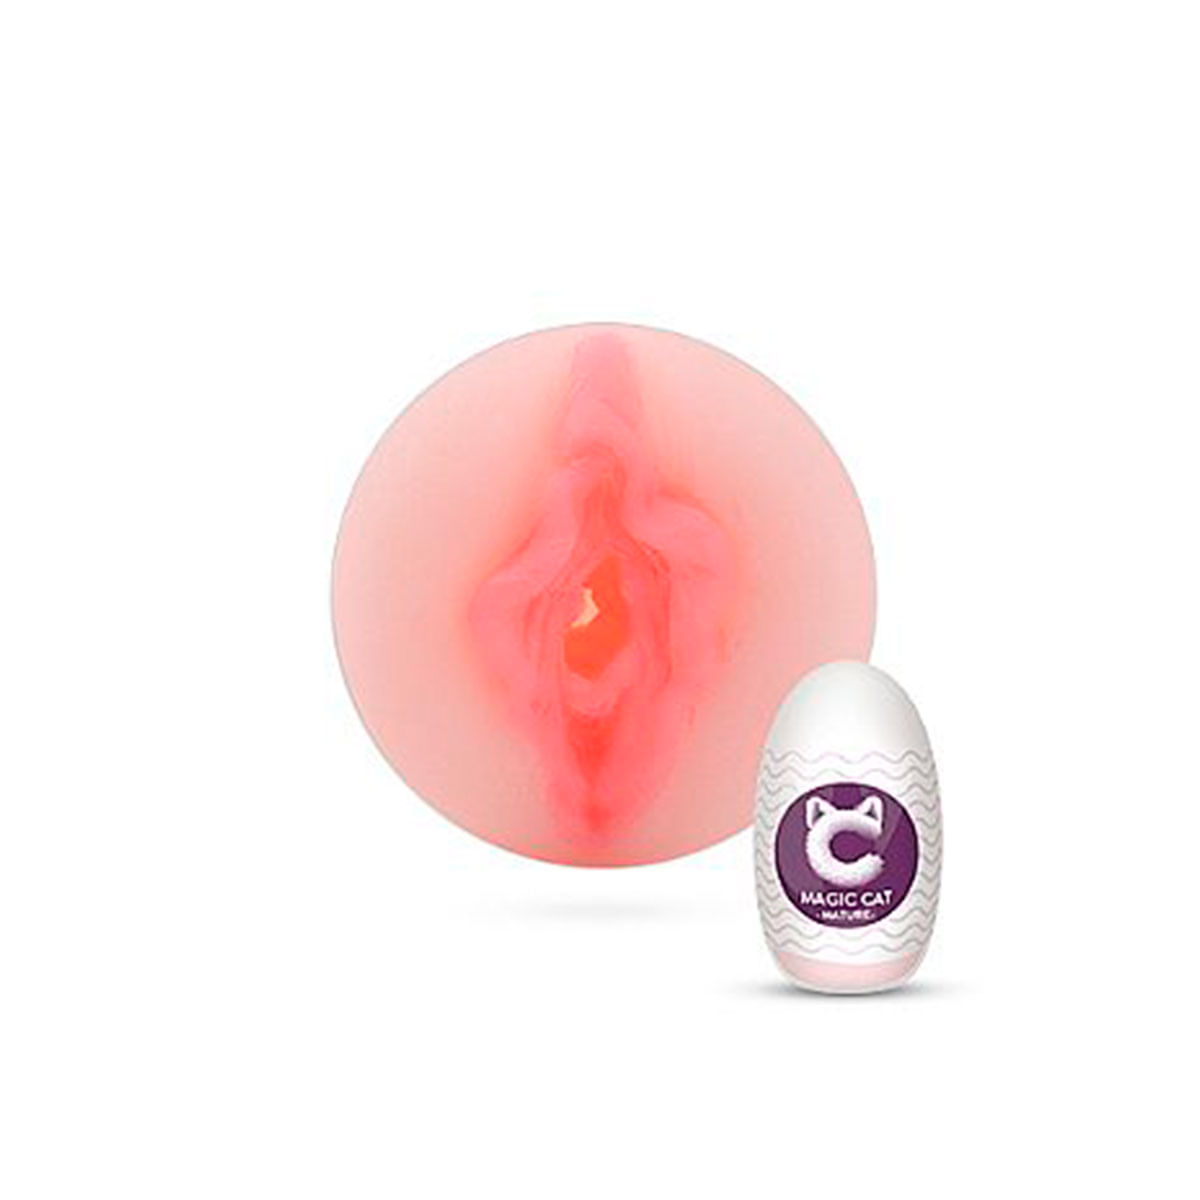 Magic Cat Mature Egg em CyberSkin Formato Vagina Sexy Import